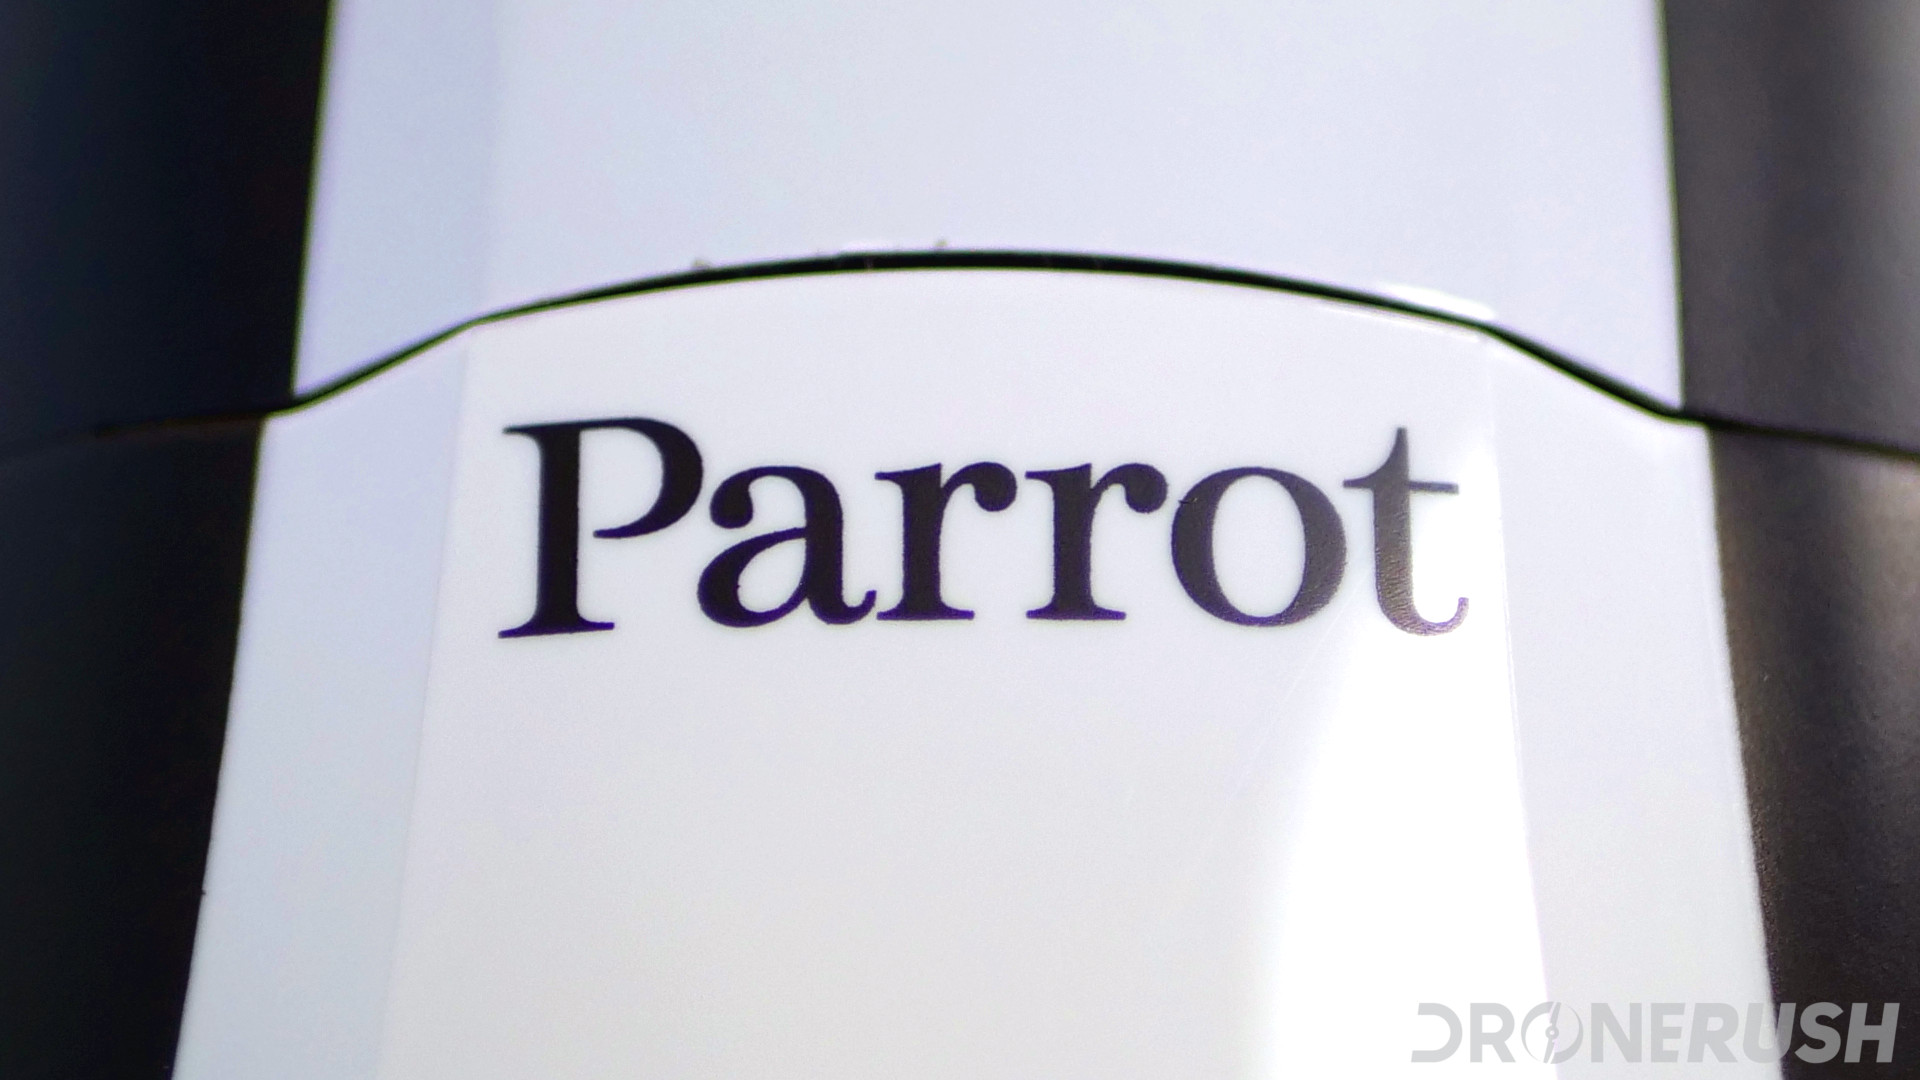 parrot drone company